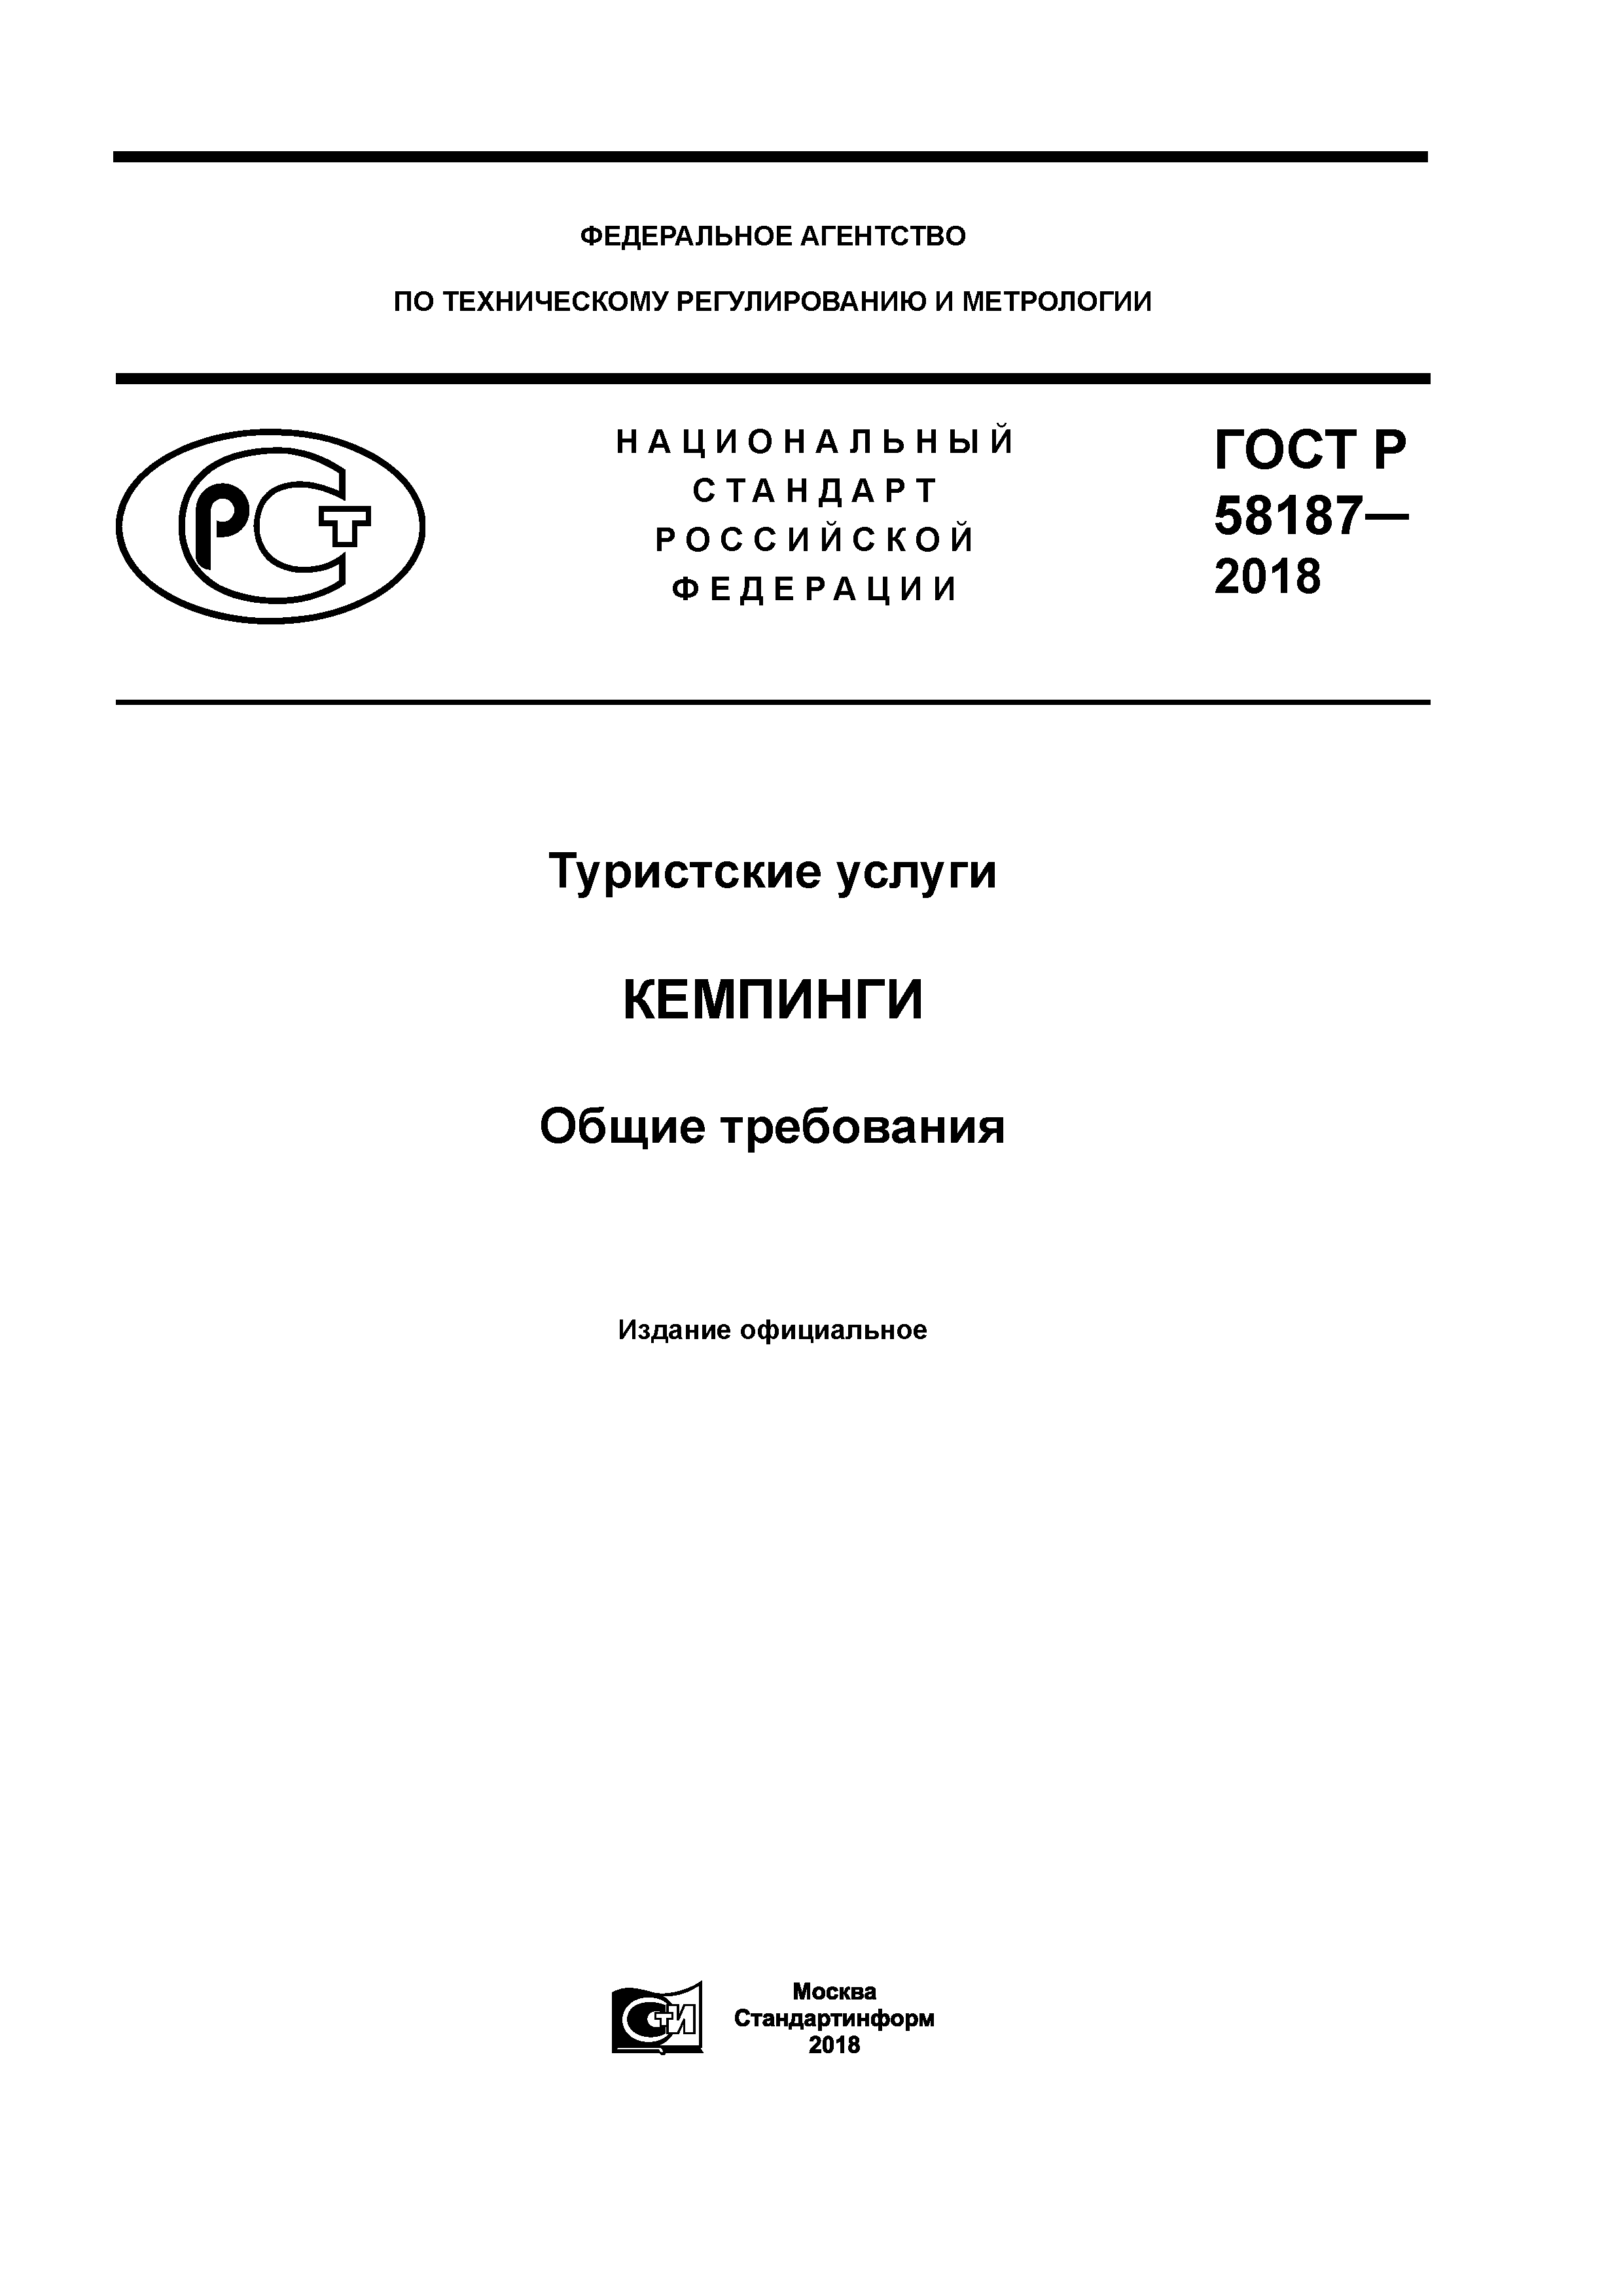 ГОСТ Р 58187-2018